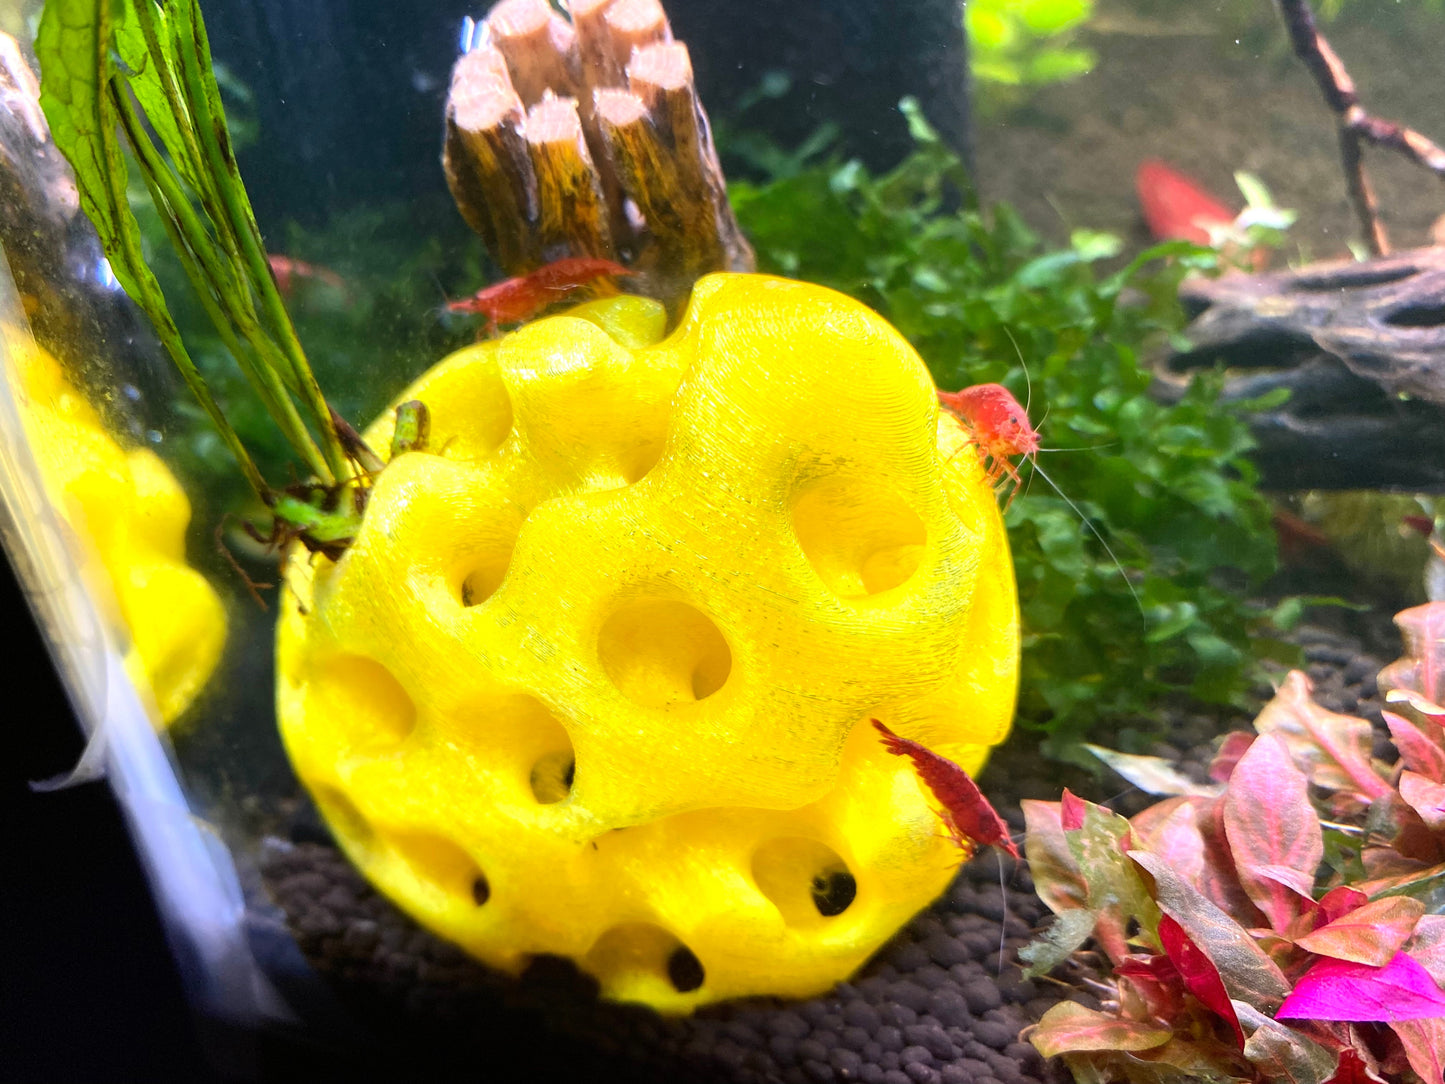 Shrimp Home, Hide, Cave! - Aquarium Safe 3D Printed ABS Plastic